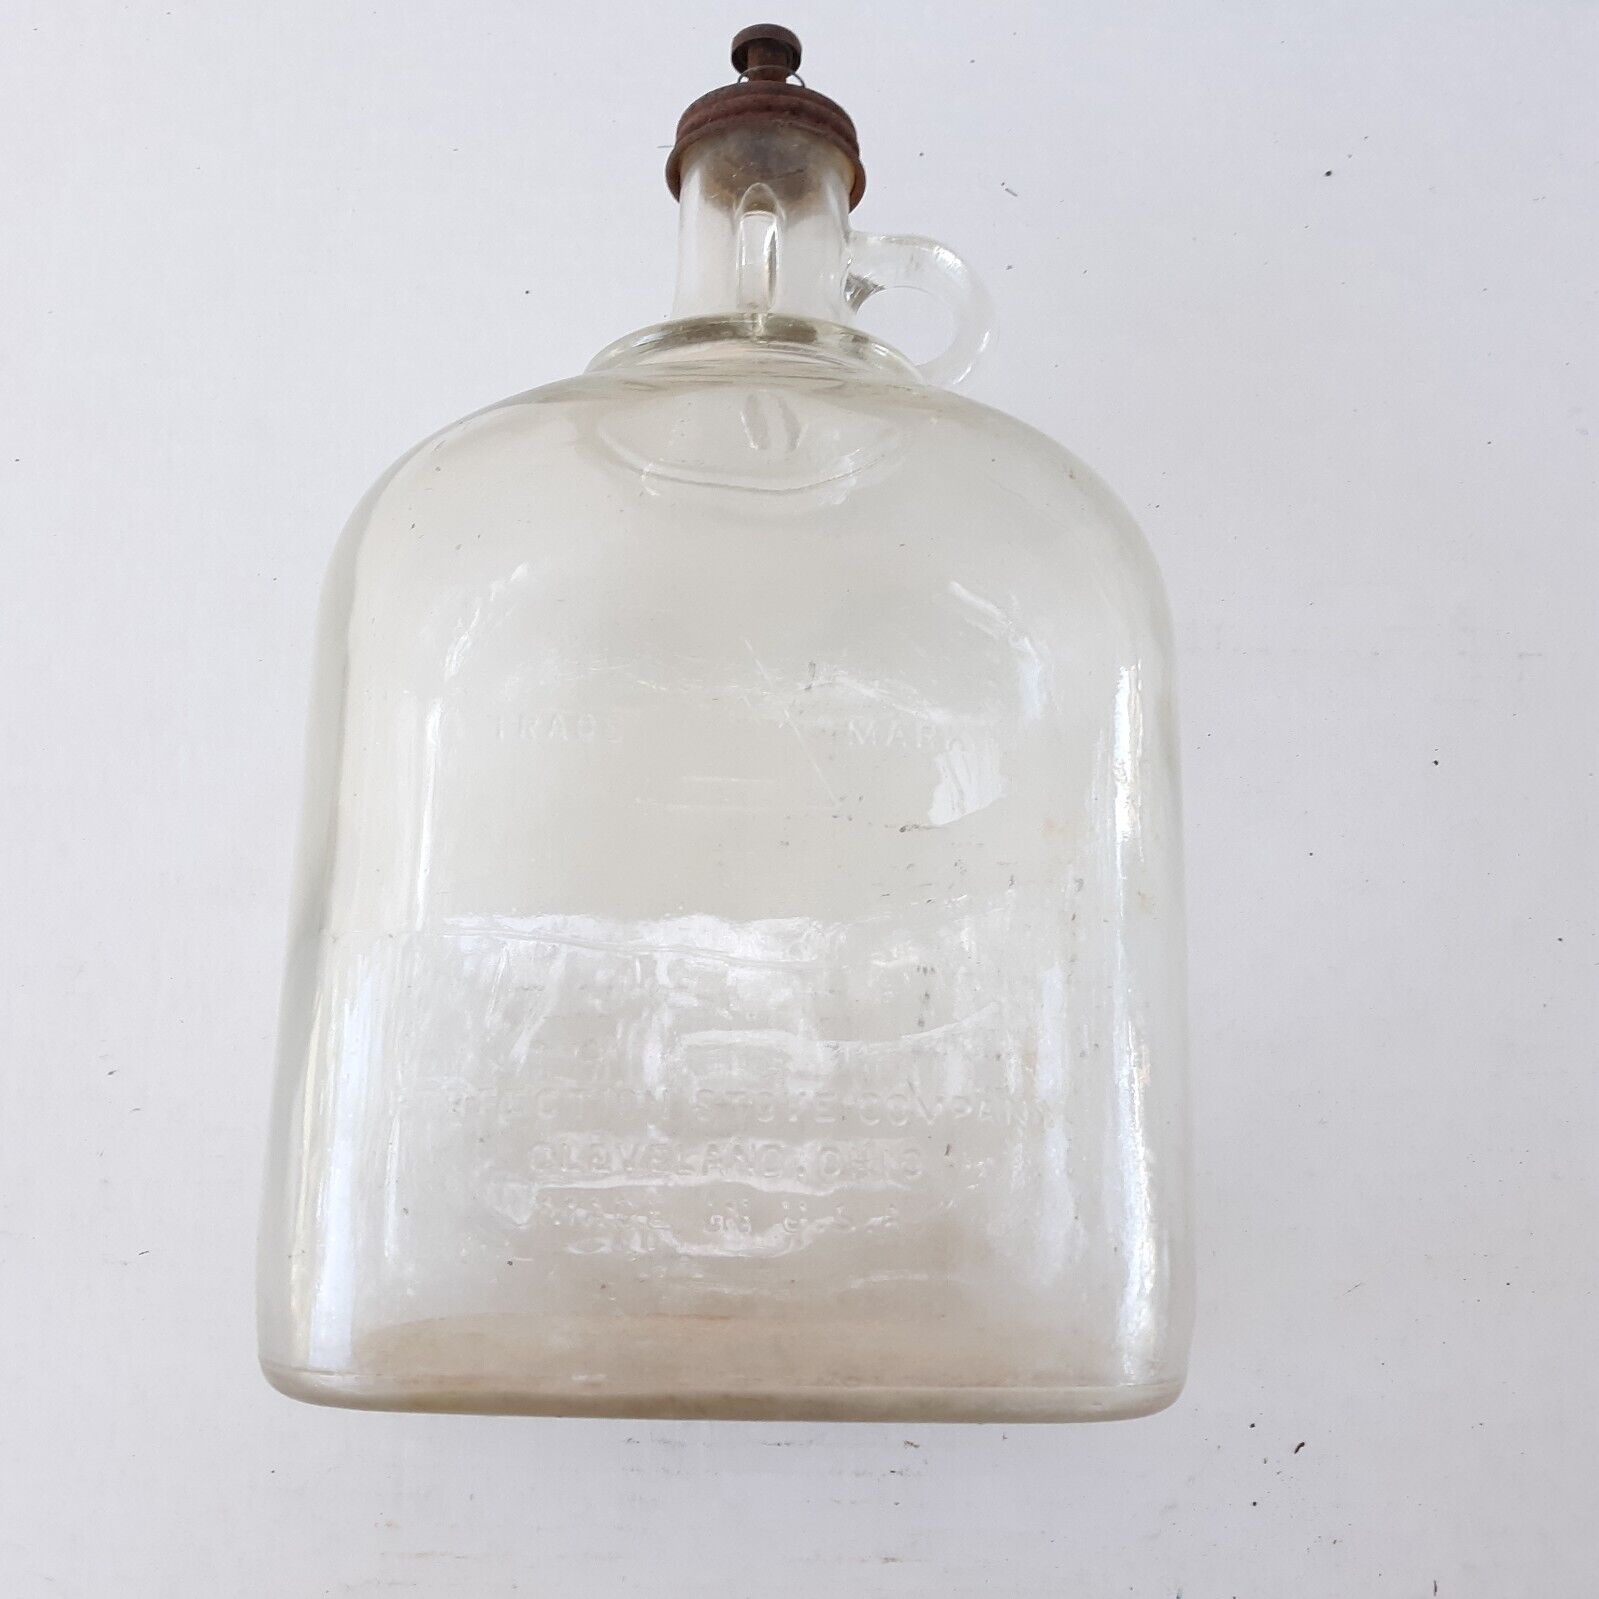 Antique Perfection Kerosene Oil Cooking Stove Fuel Glass Jug Bottle Reservoir